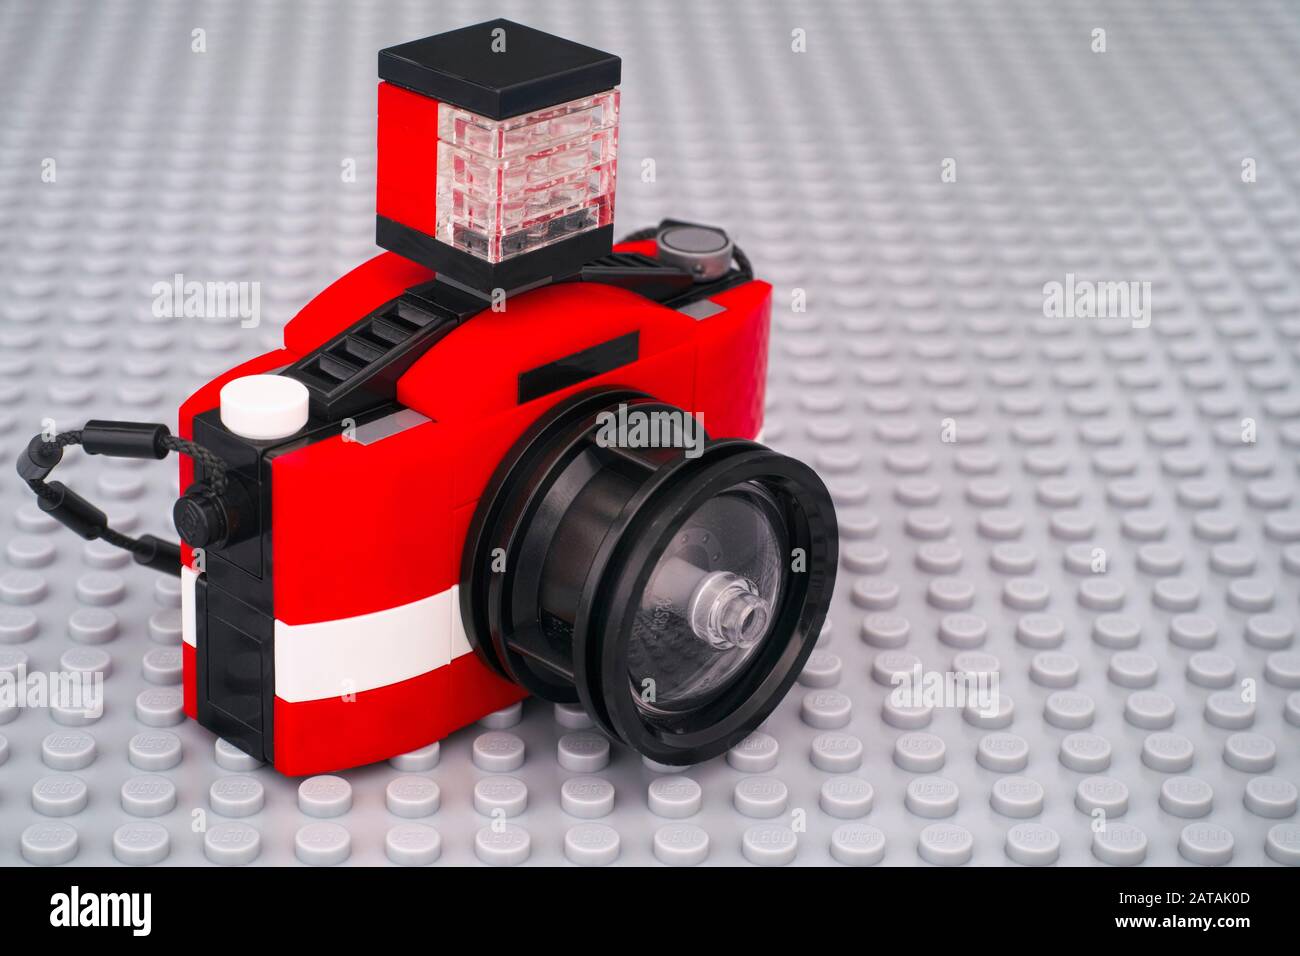 La LEGO-cámara » Meliuli